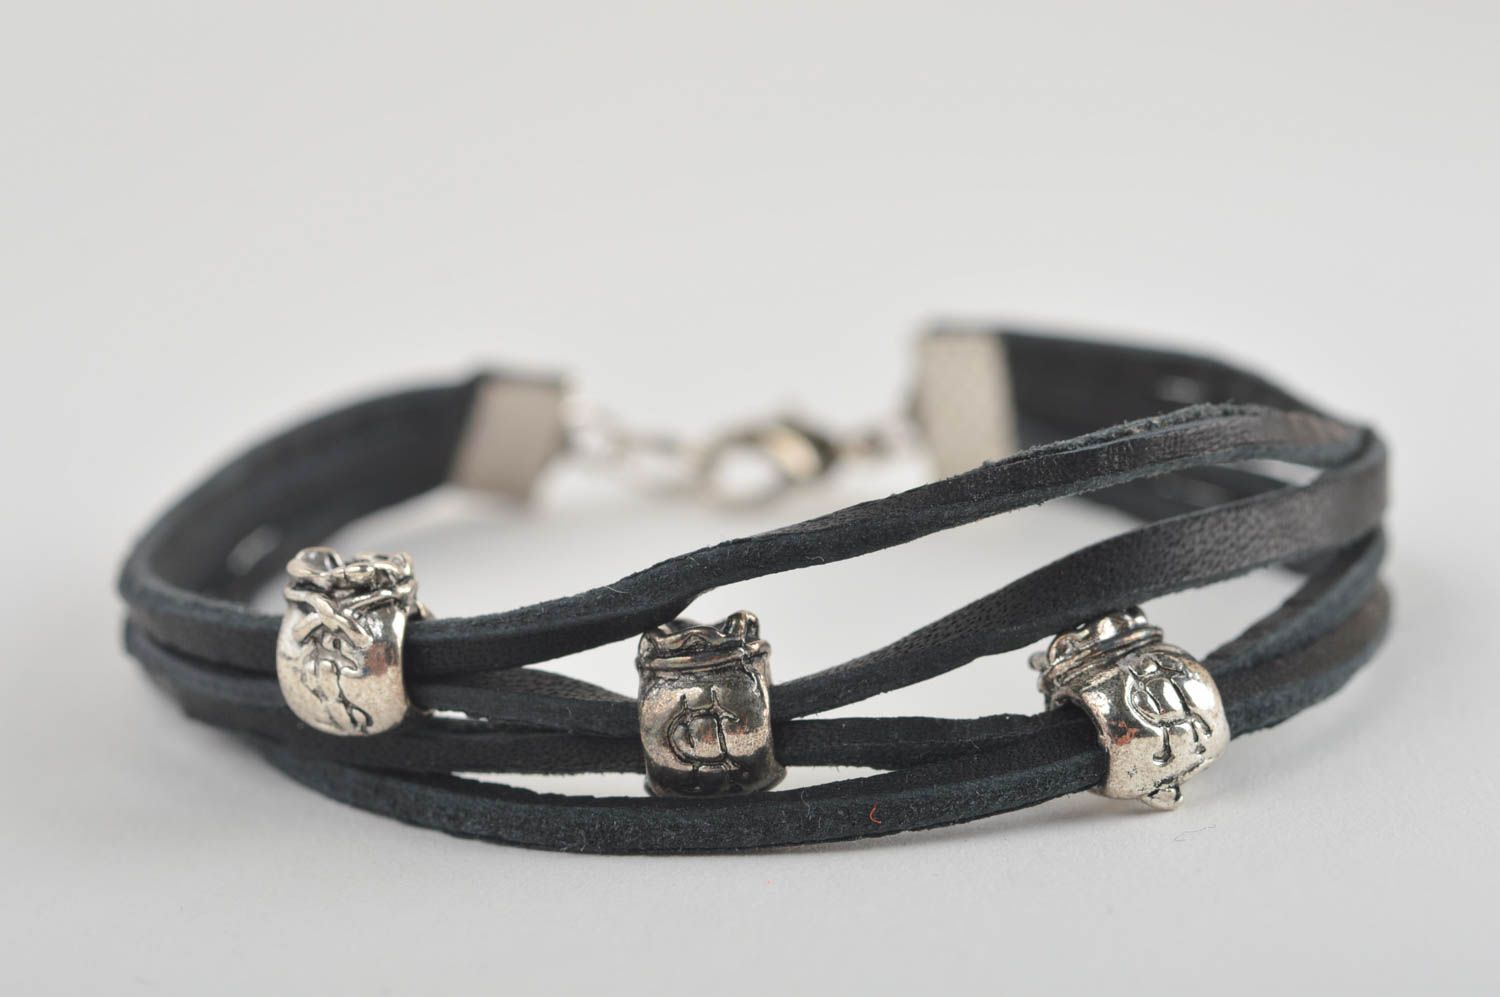 Handmade leather bracelet wrist bracelet black bracelets for women cool gifts photo 3